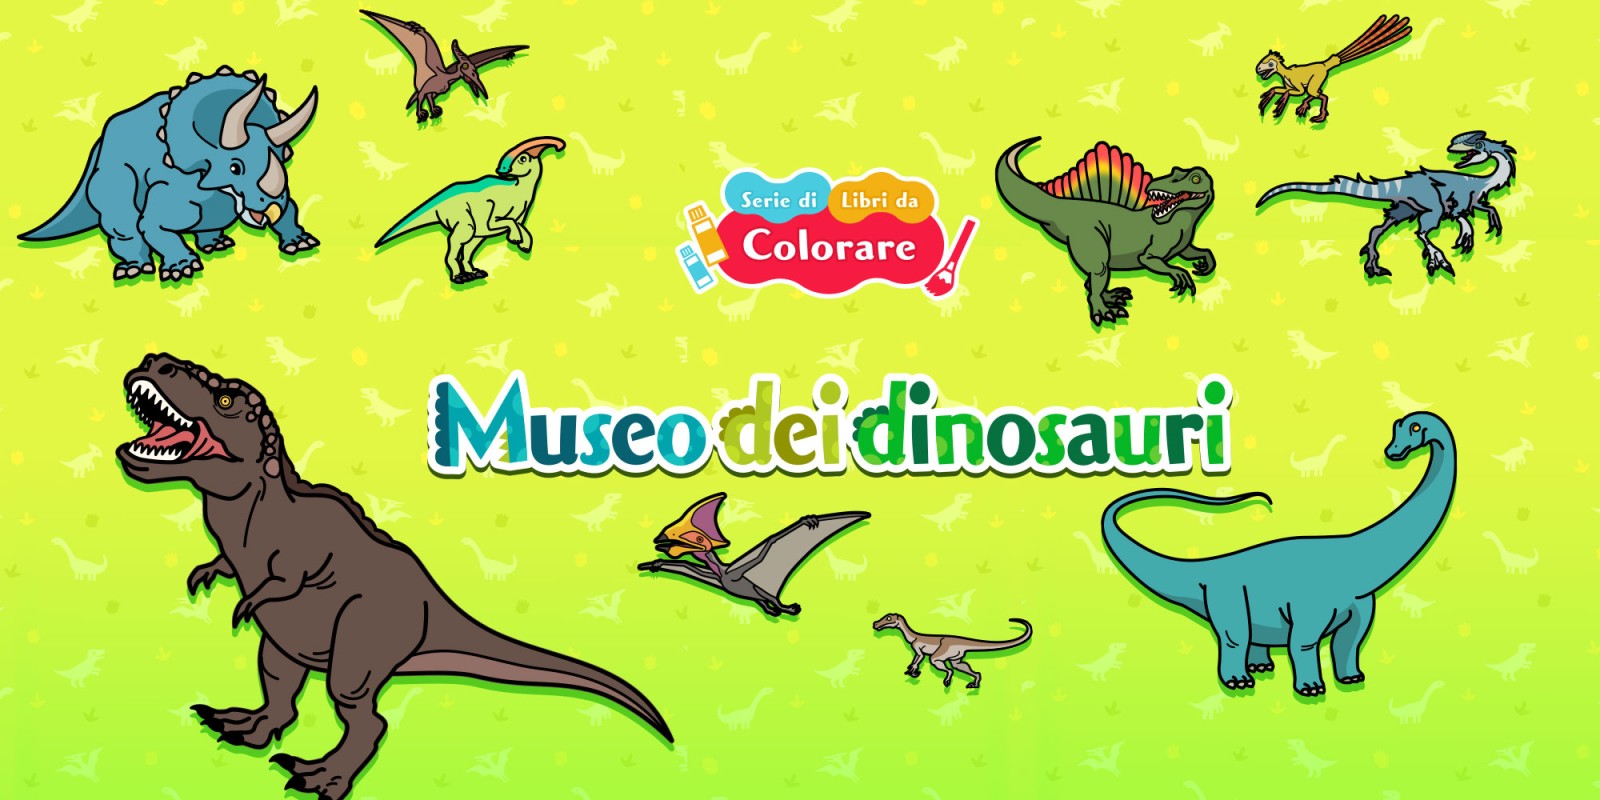 Serie di libri da colorare Musée des dinosaures